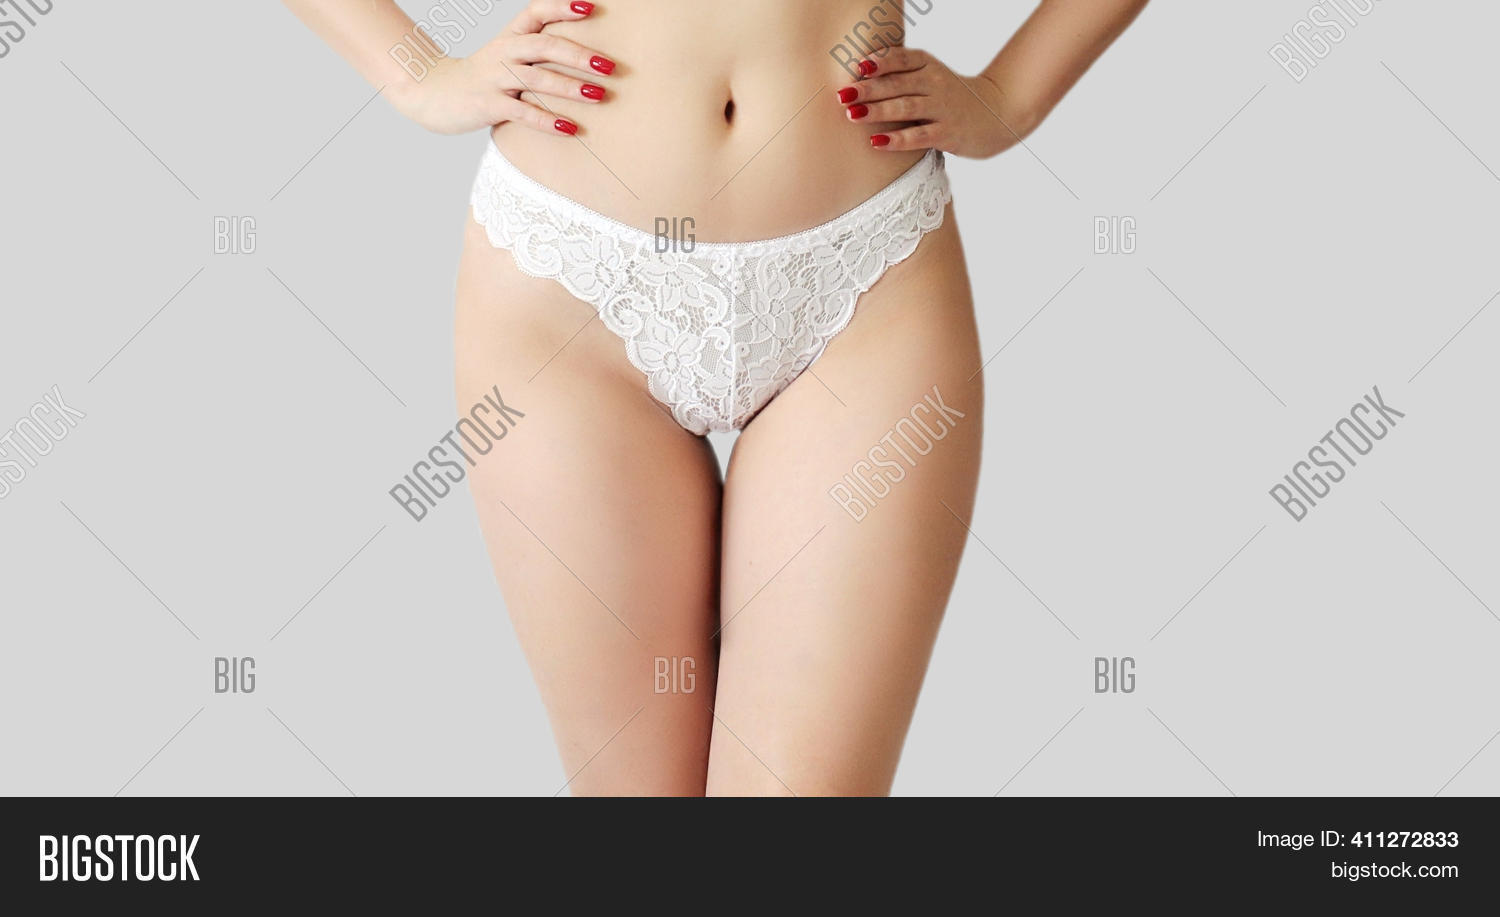 david cappelletti share sexy white panties photos